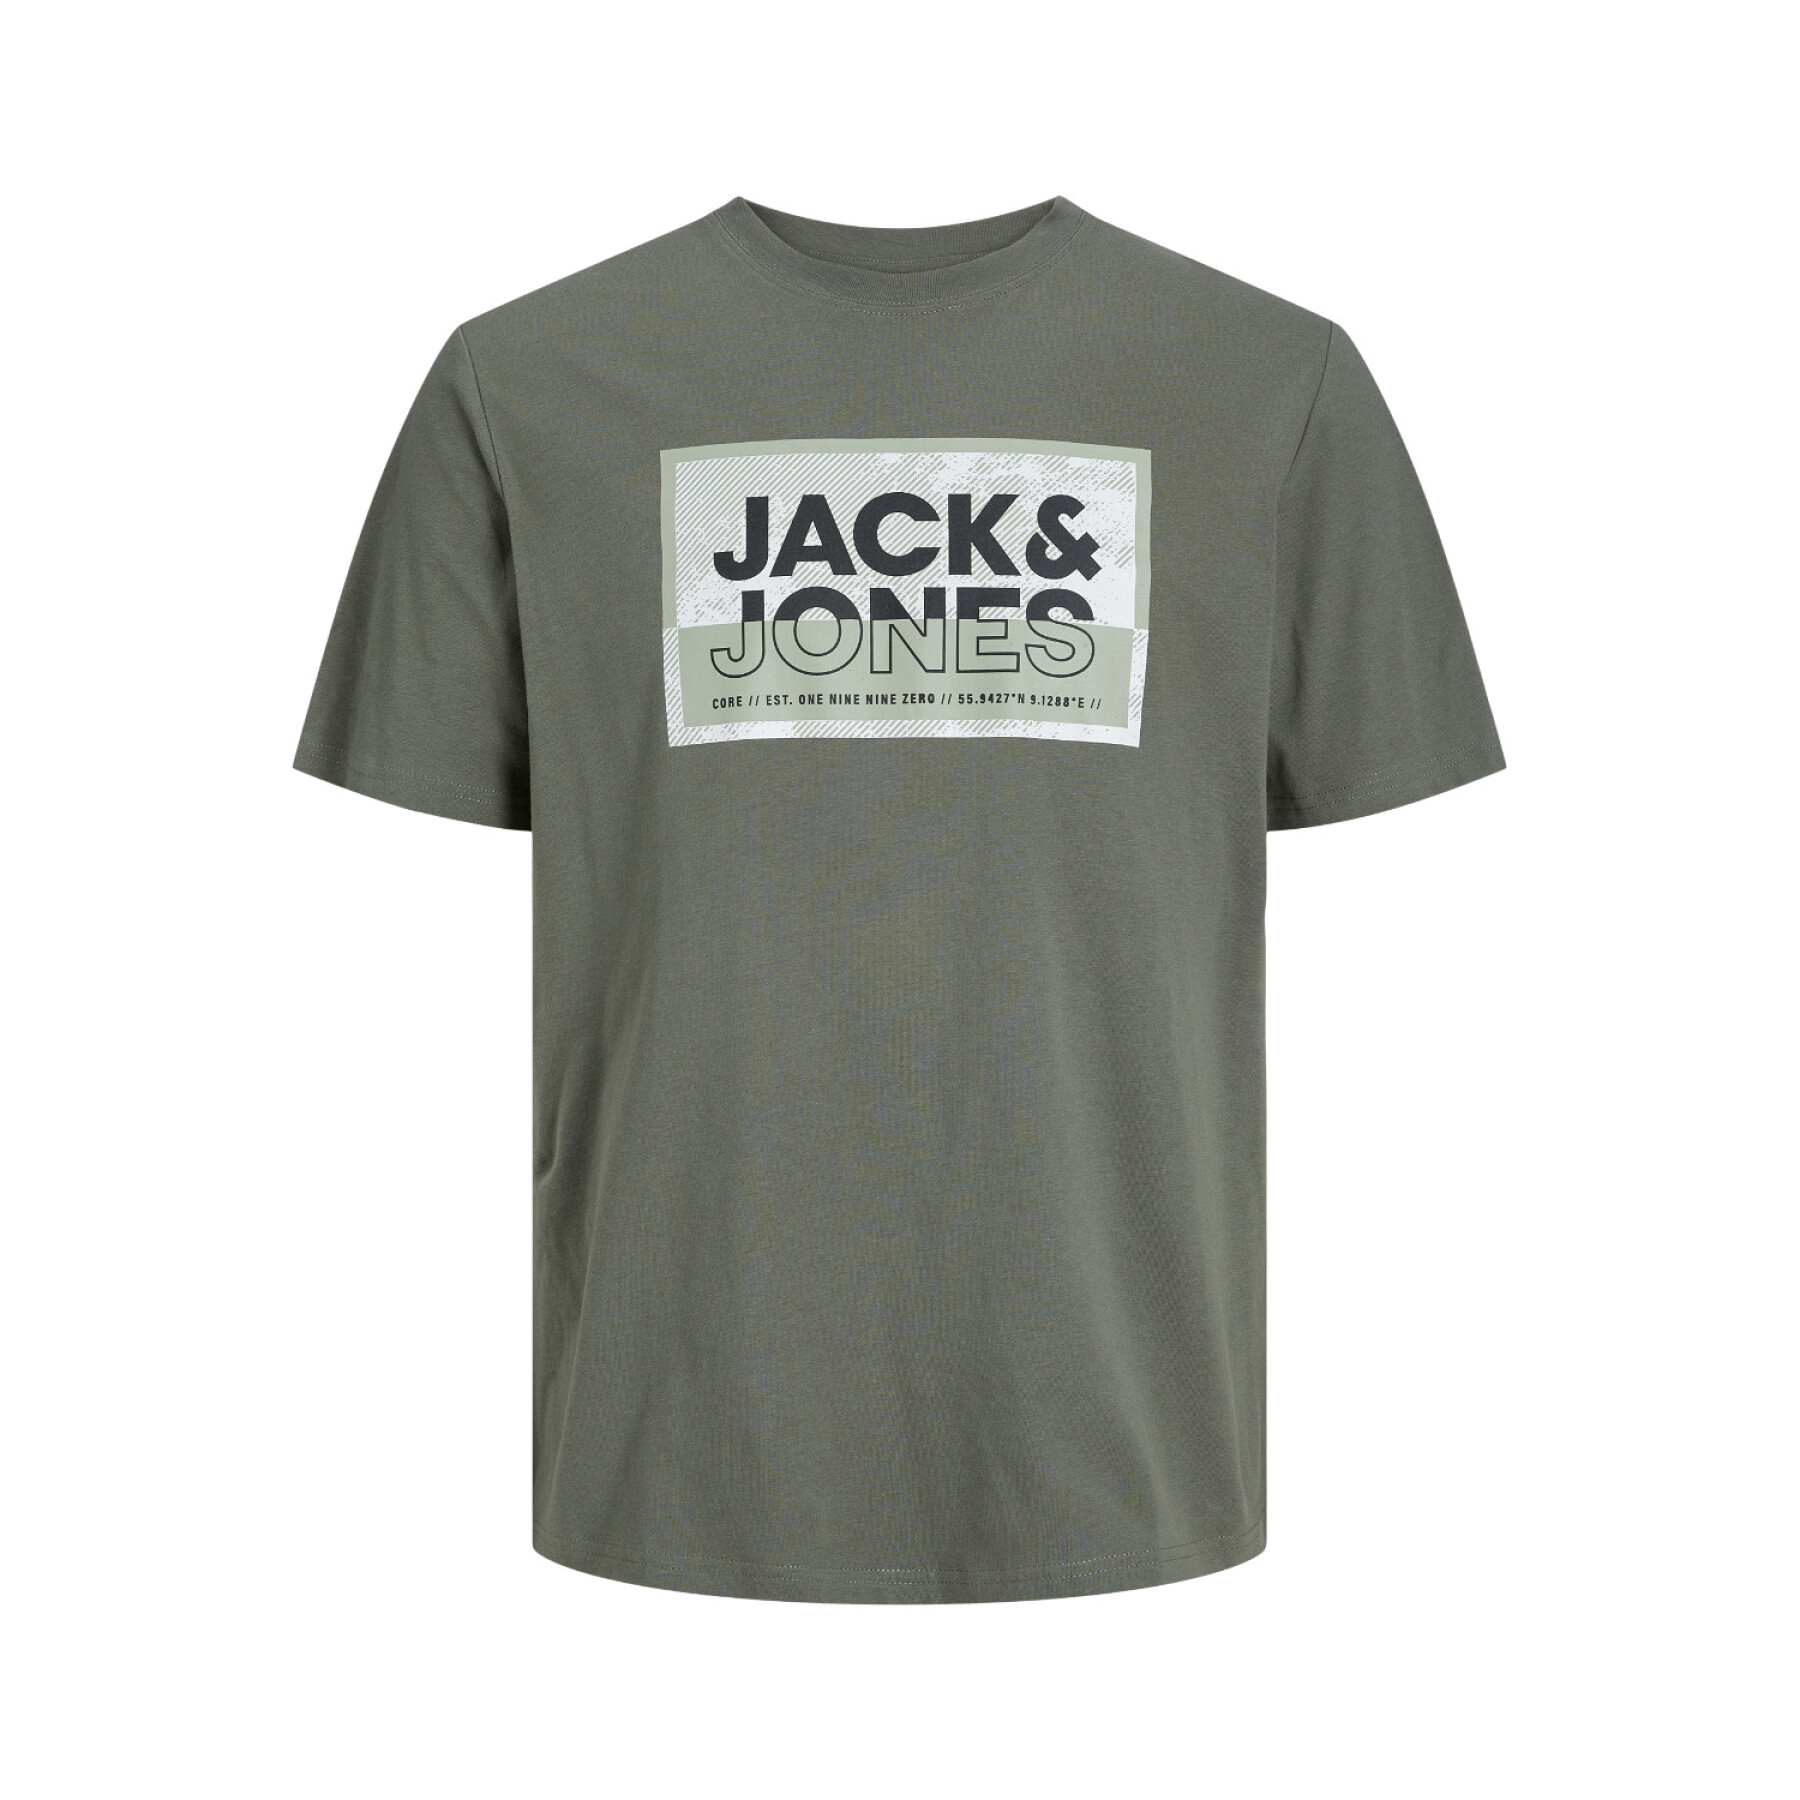 Camiseta infantil Jack & Jones Logan